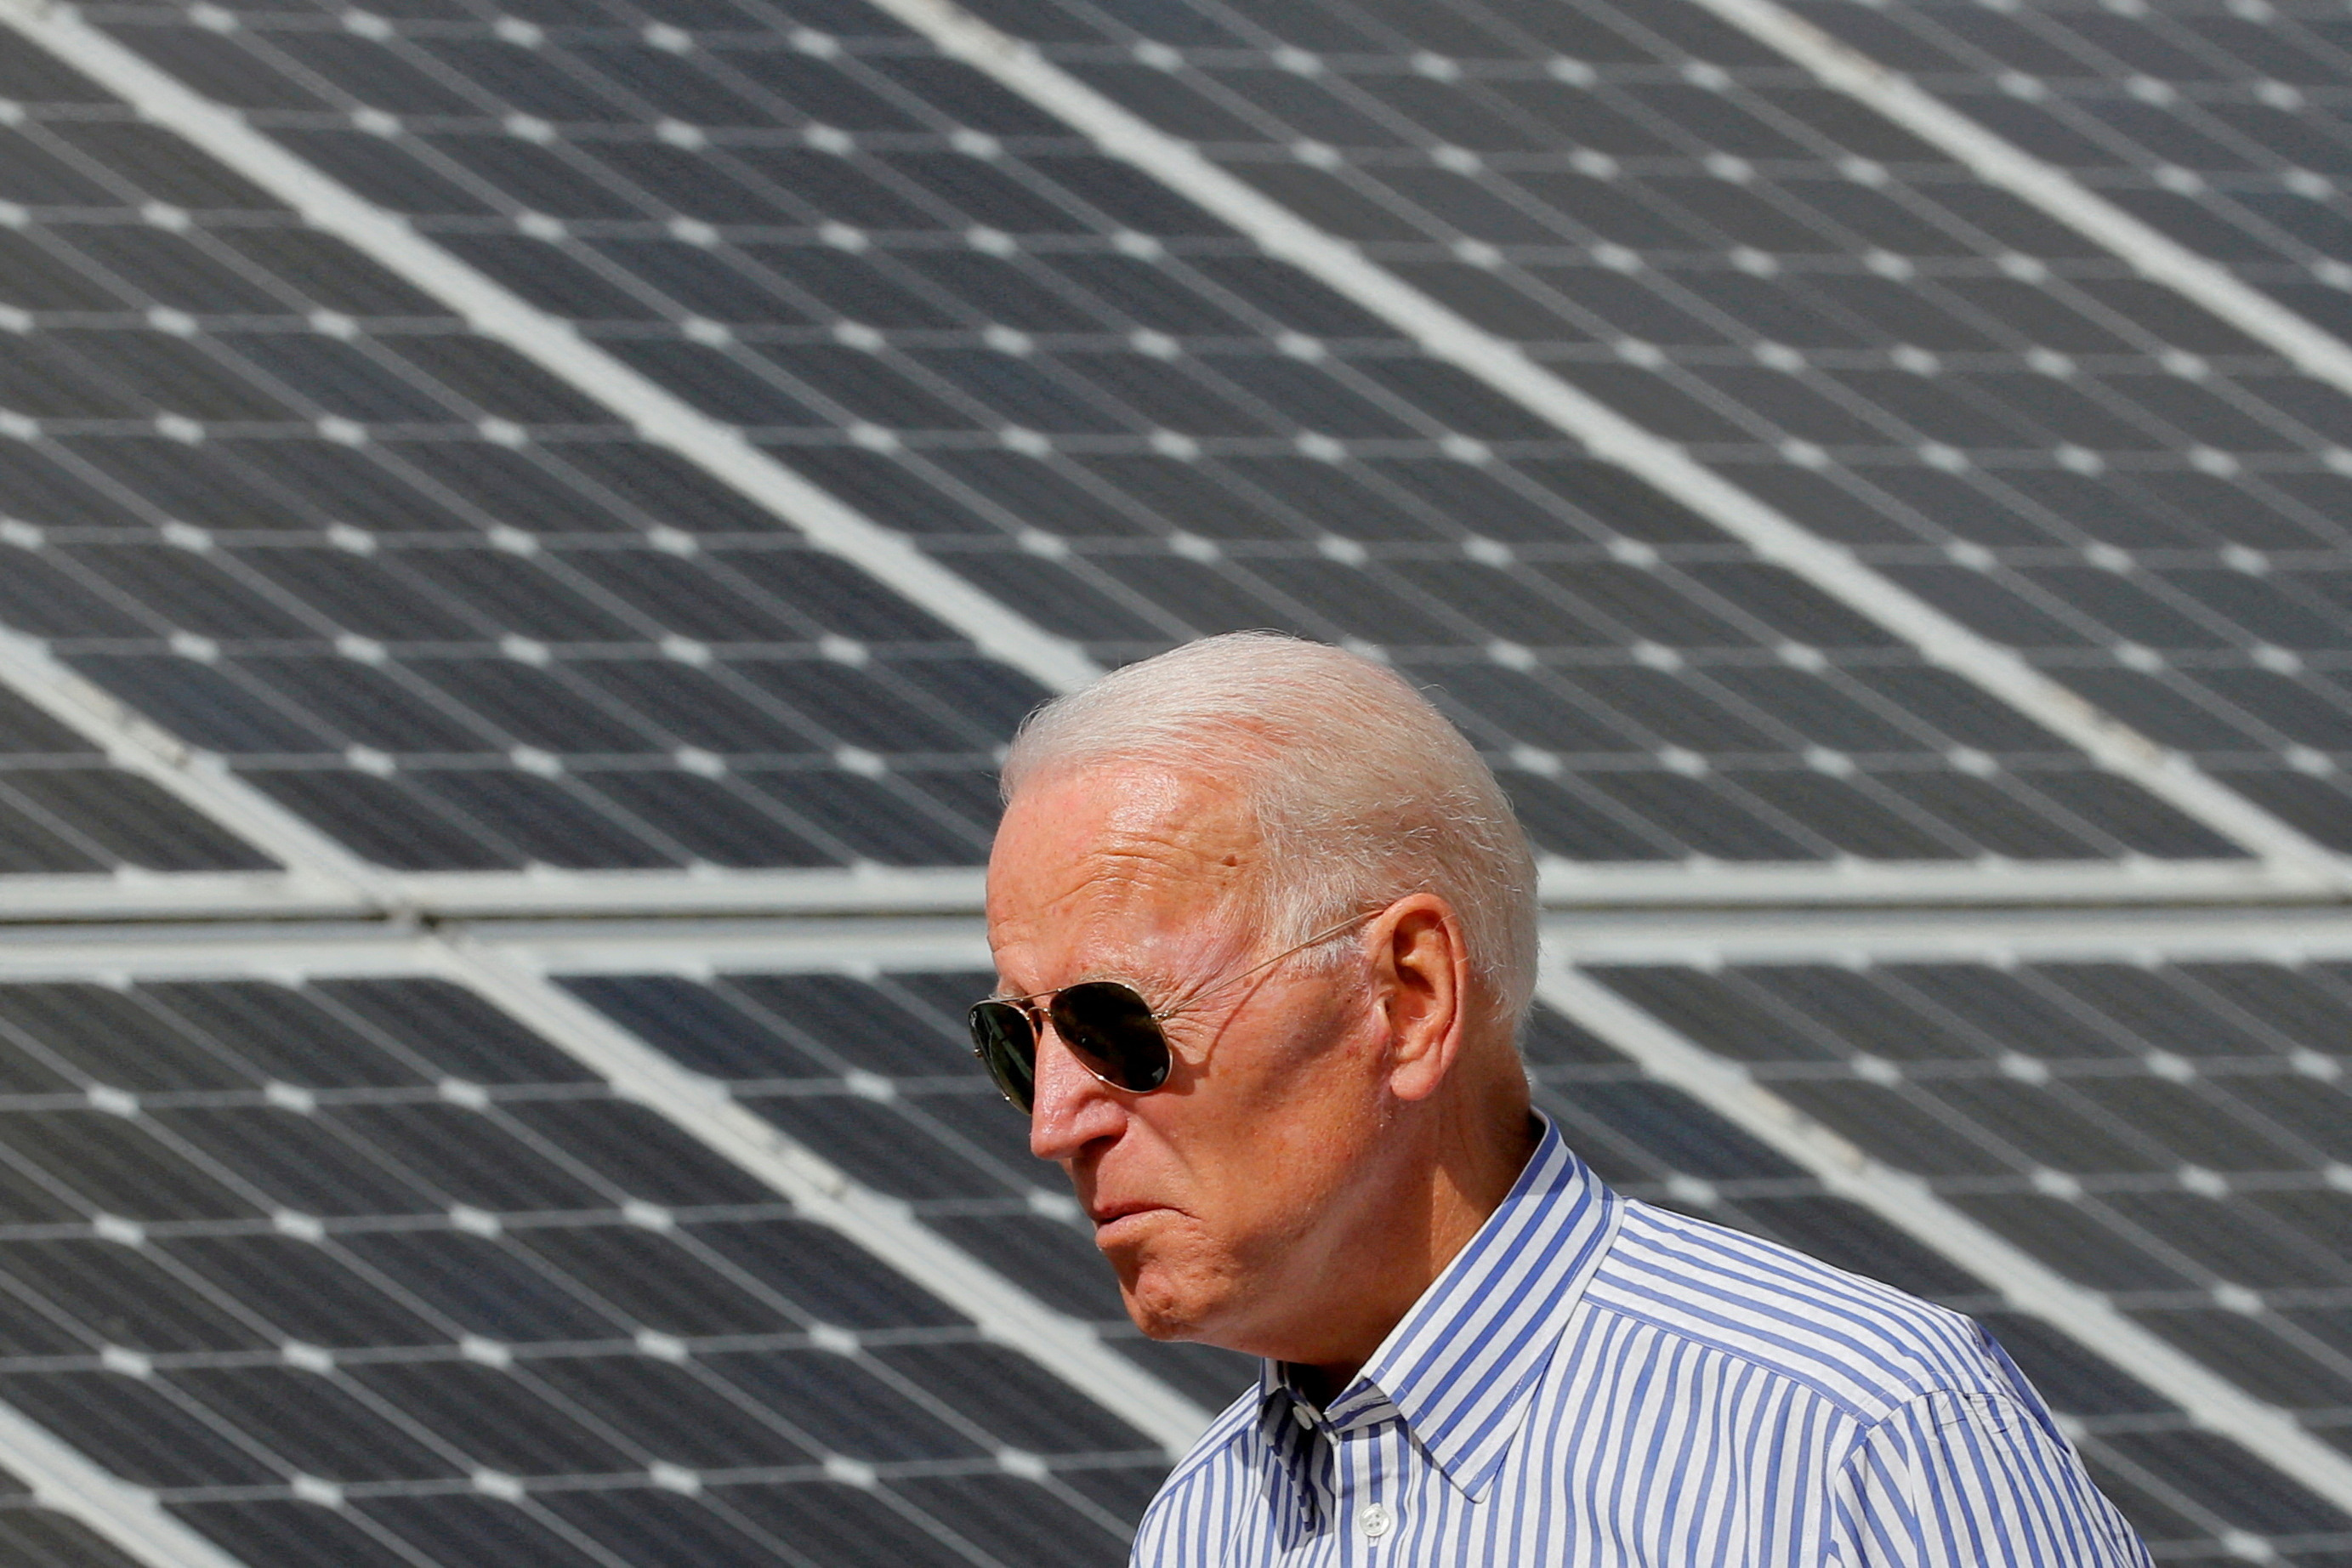 Biden walks past solar panels in Plymouth